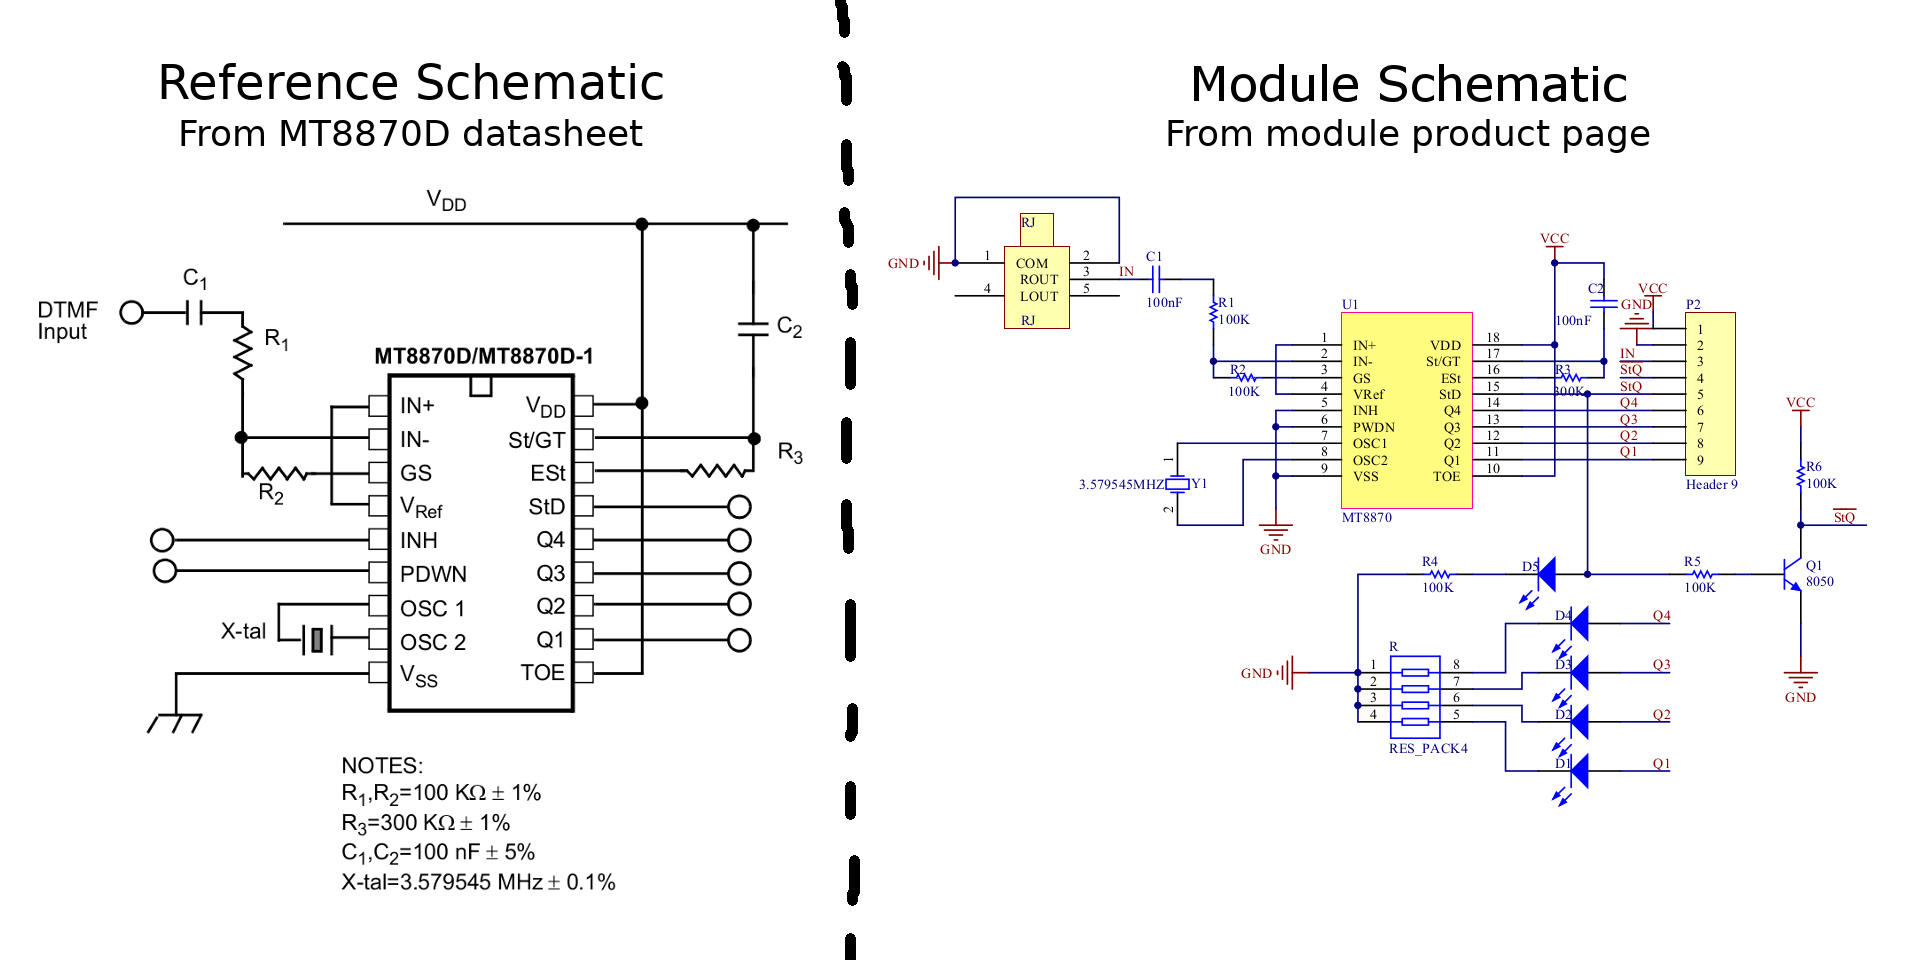 DTMF module schematic